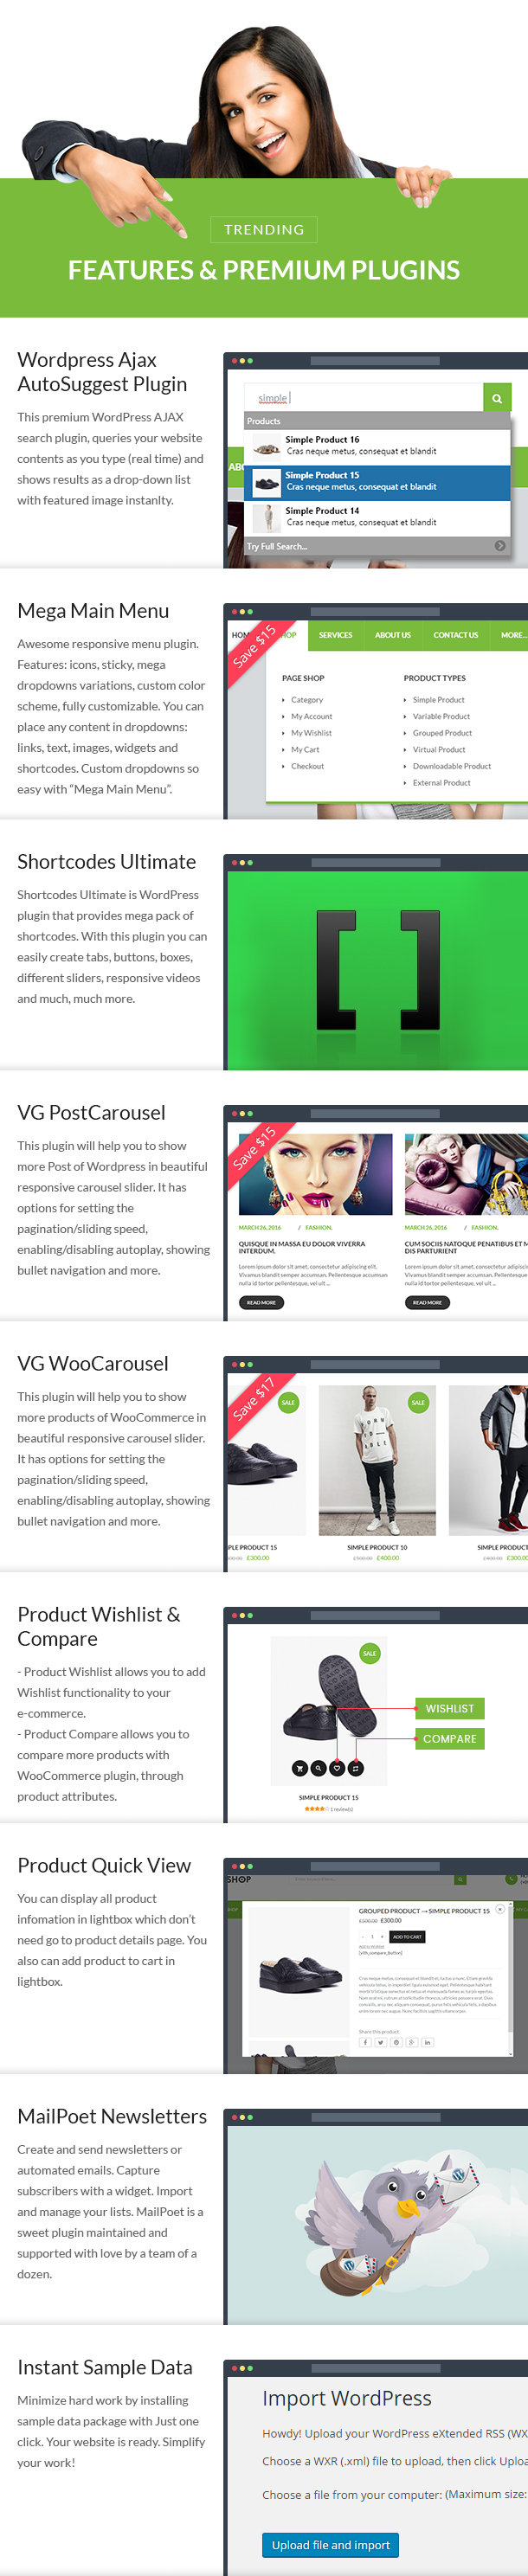 VG JanShop - Responsives WooCommerce WordPress Layout